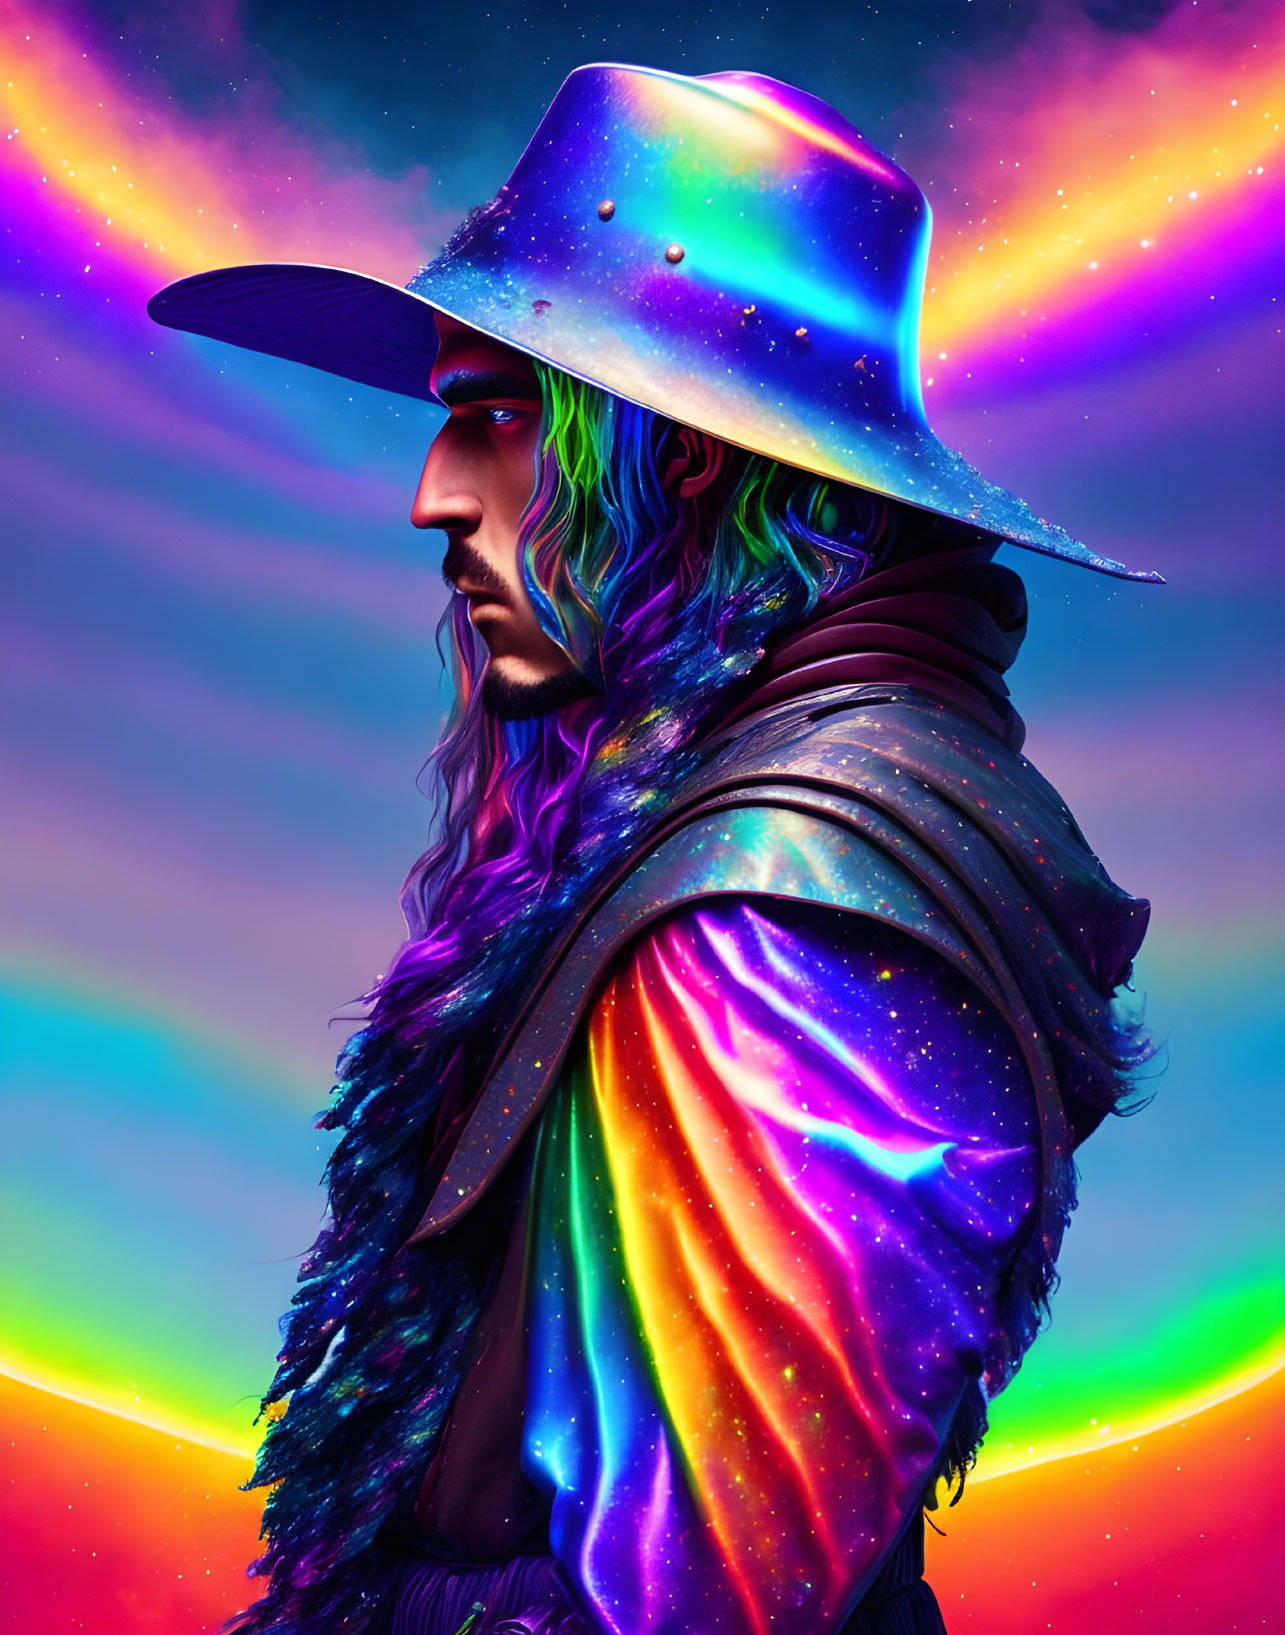 Colorful digital portrait of a man in cosmic cowboy hat and rainbow attire under neon aurora sky